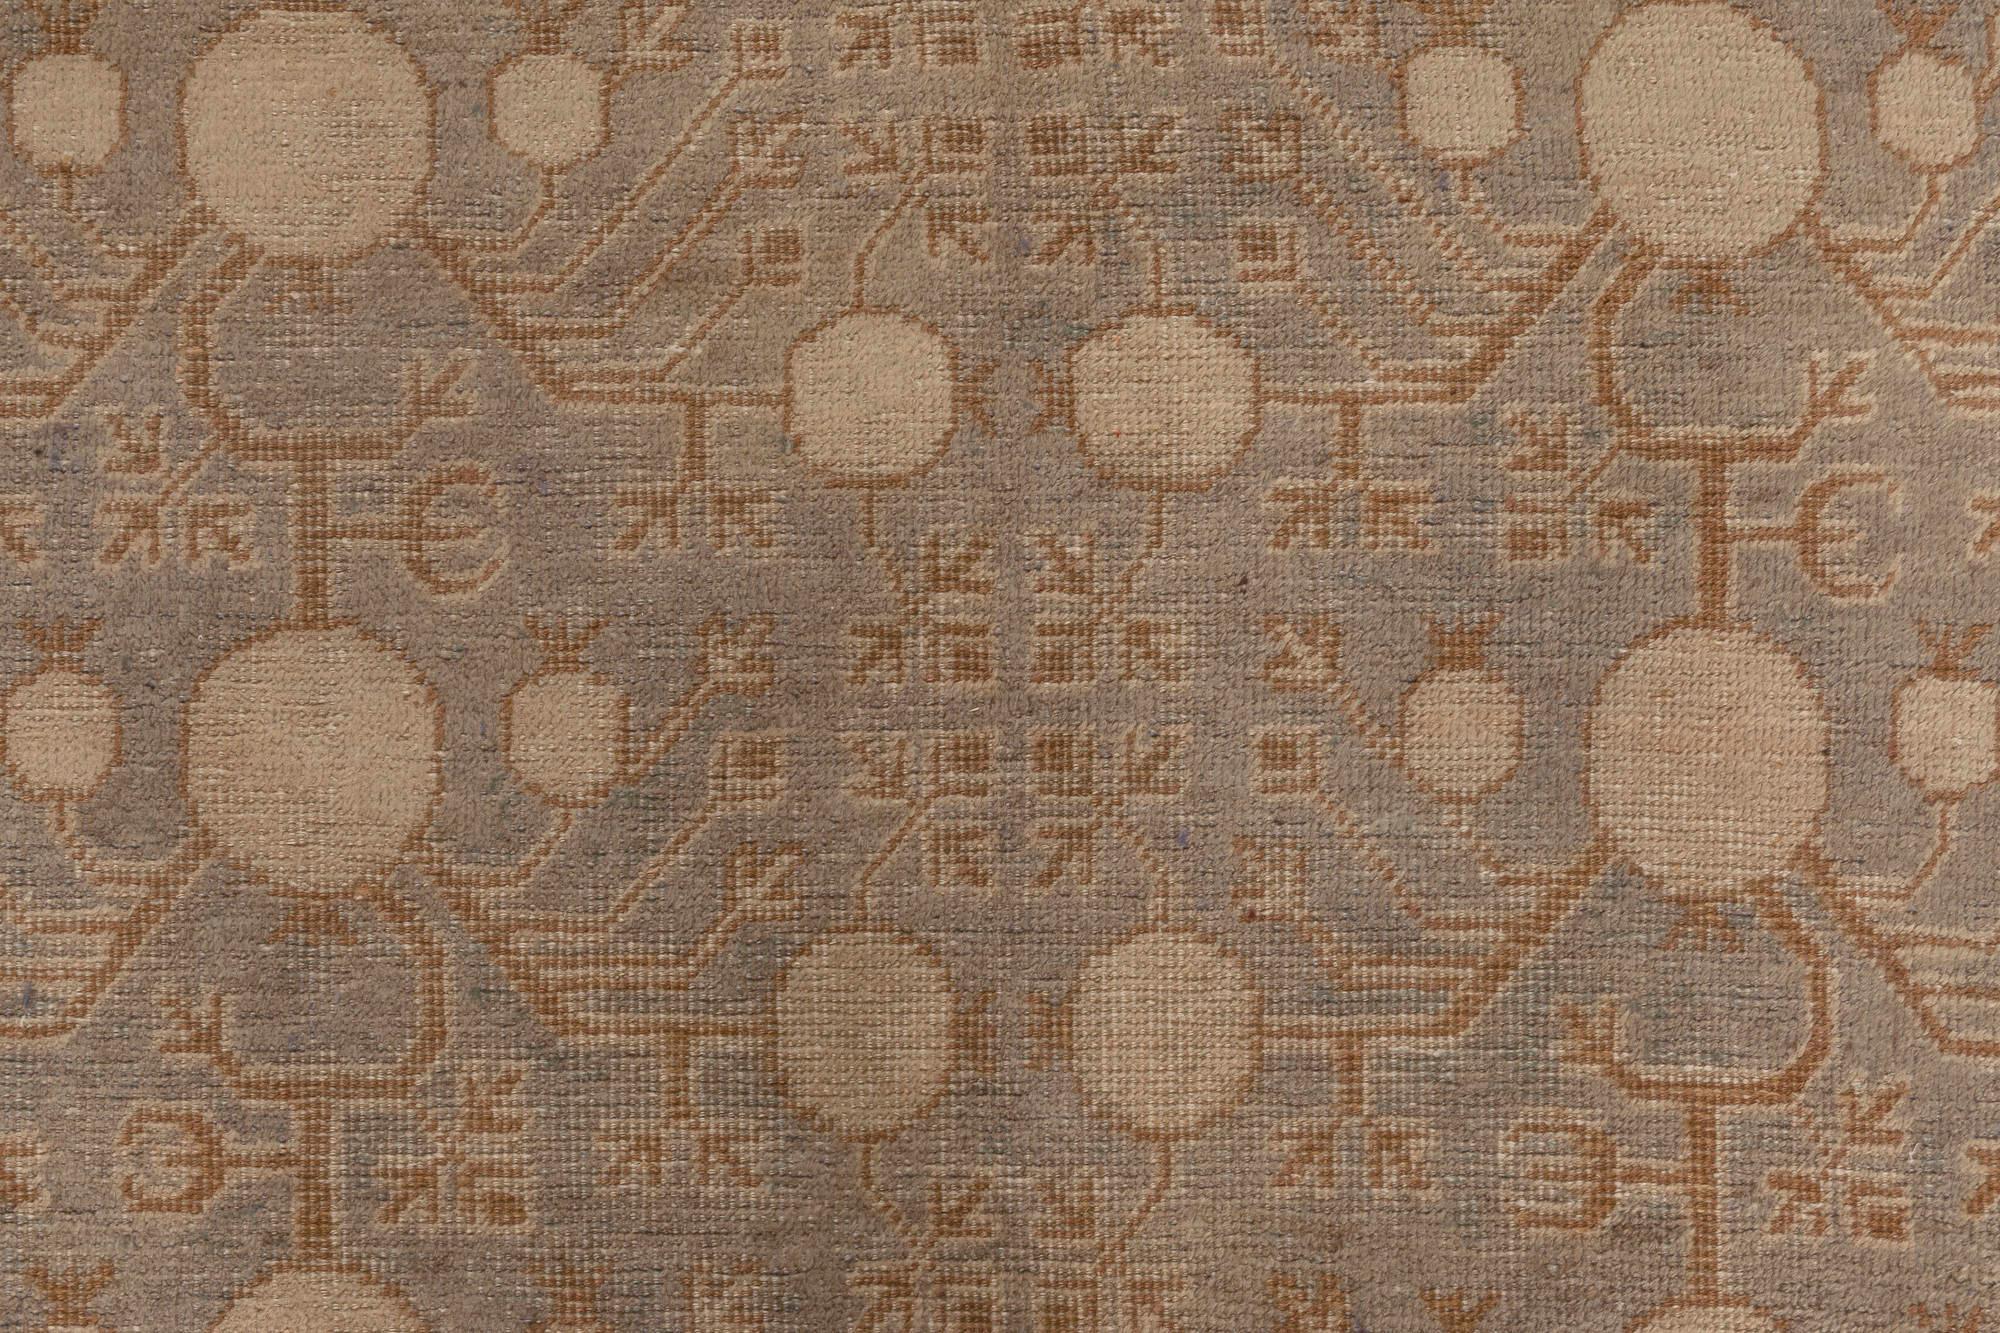 Midcentury Samarkand blue and brown handmade wool rug.
Size: 5'3